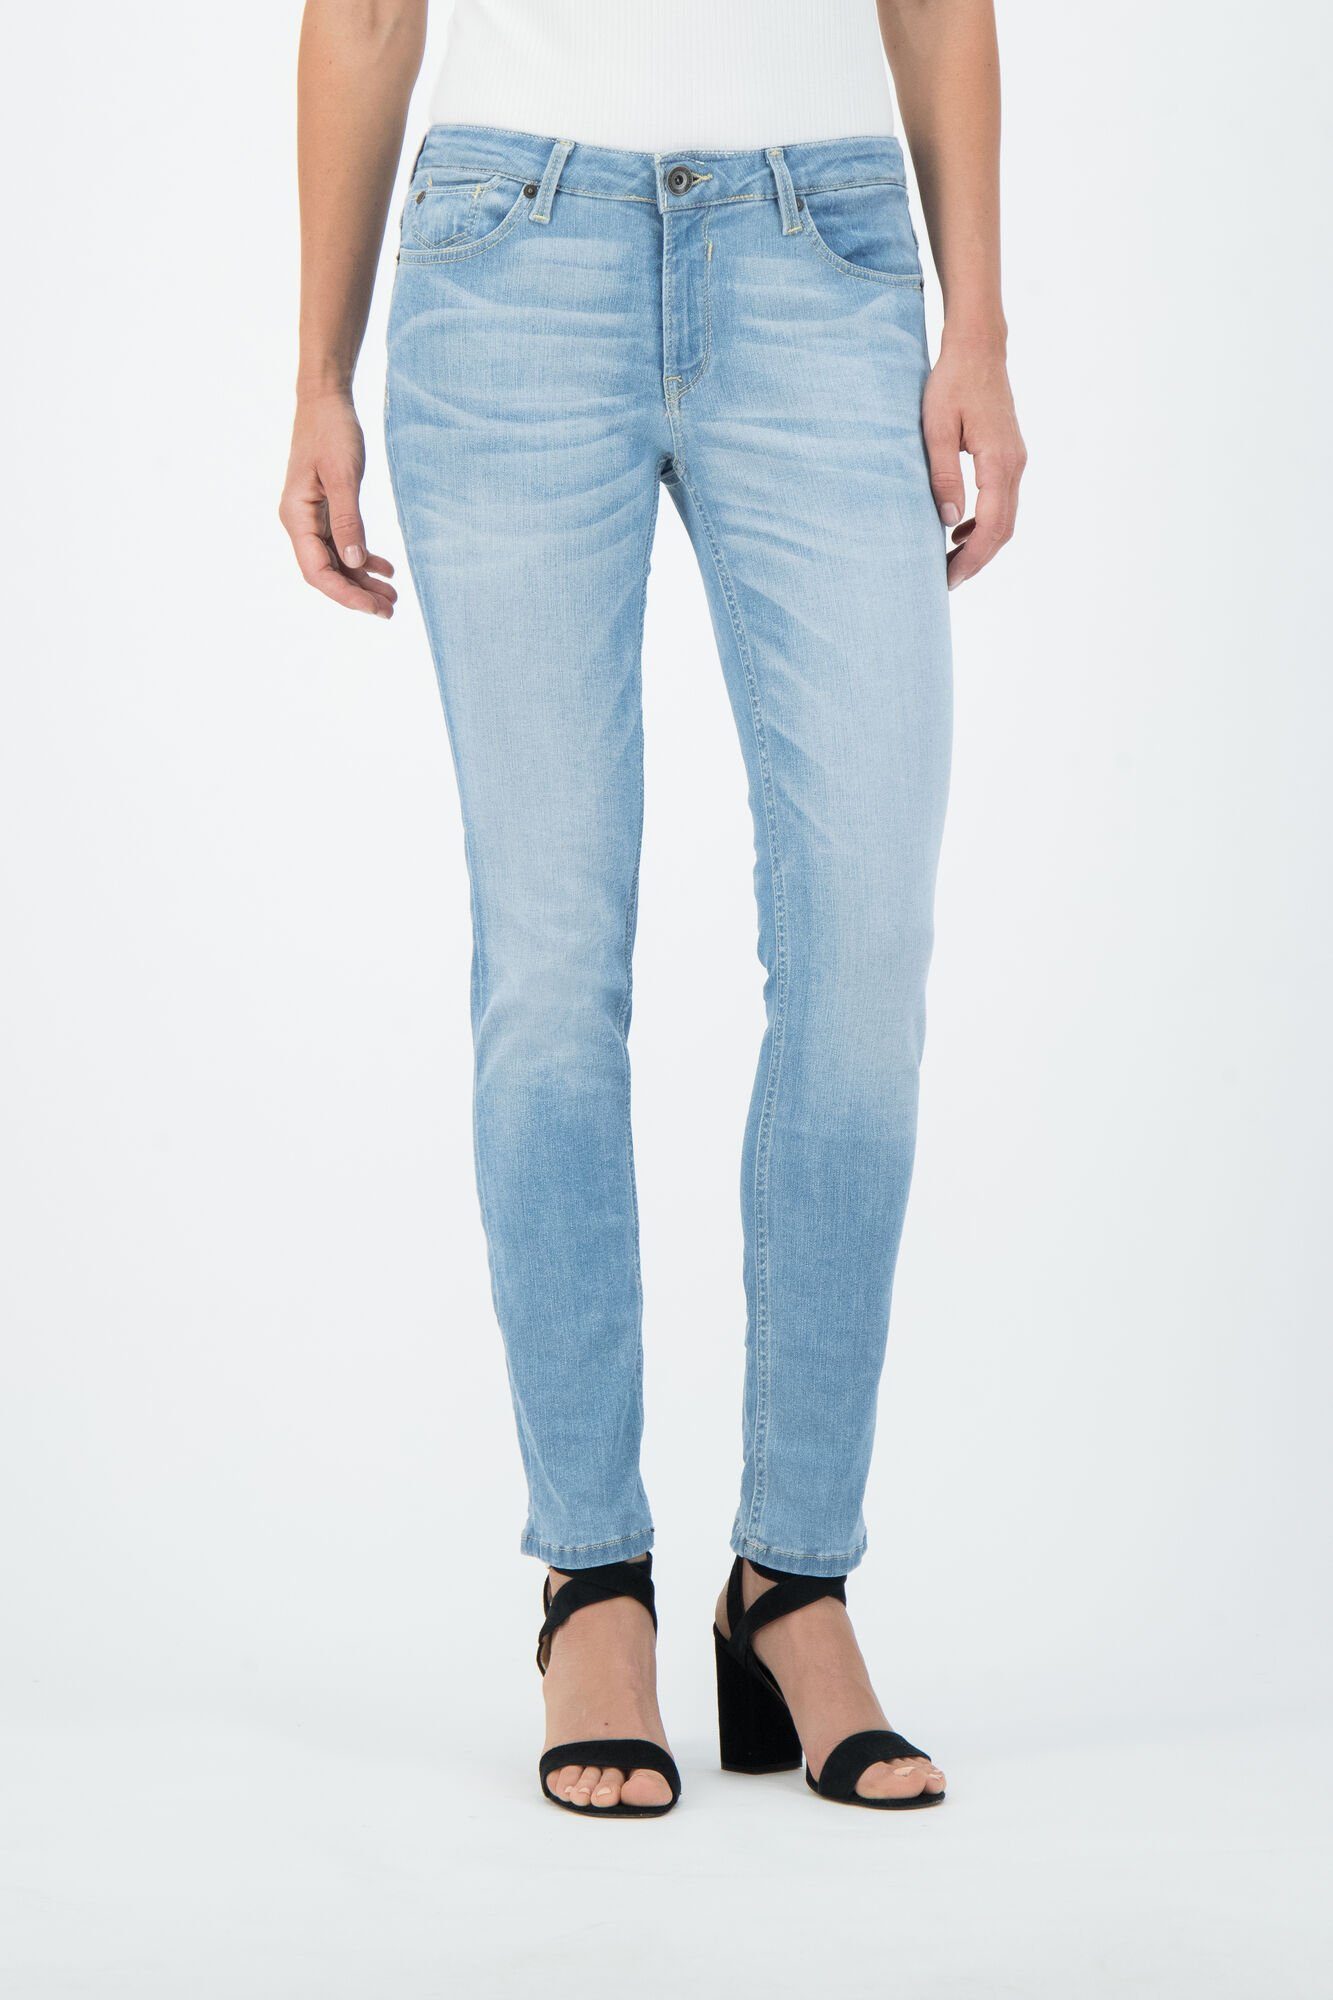 GARCIA JEANS Stretch-Jeans 275.5940 used blue Flow GARCIA RACHELLE light - Denim medium